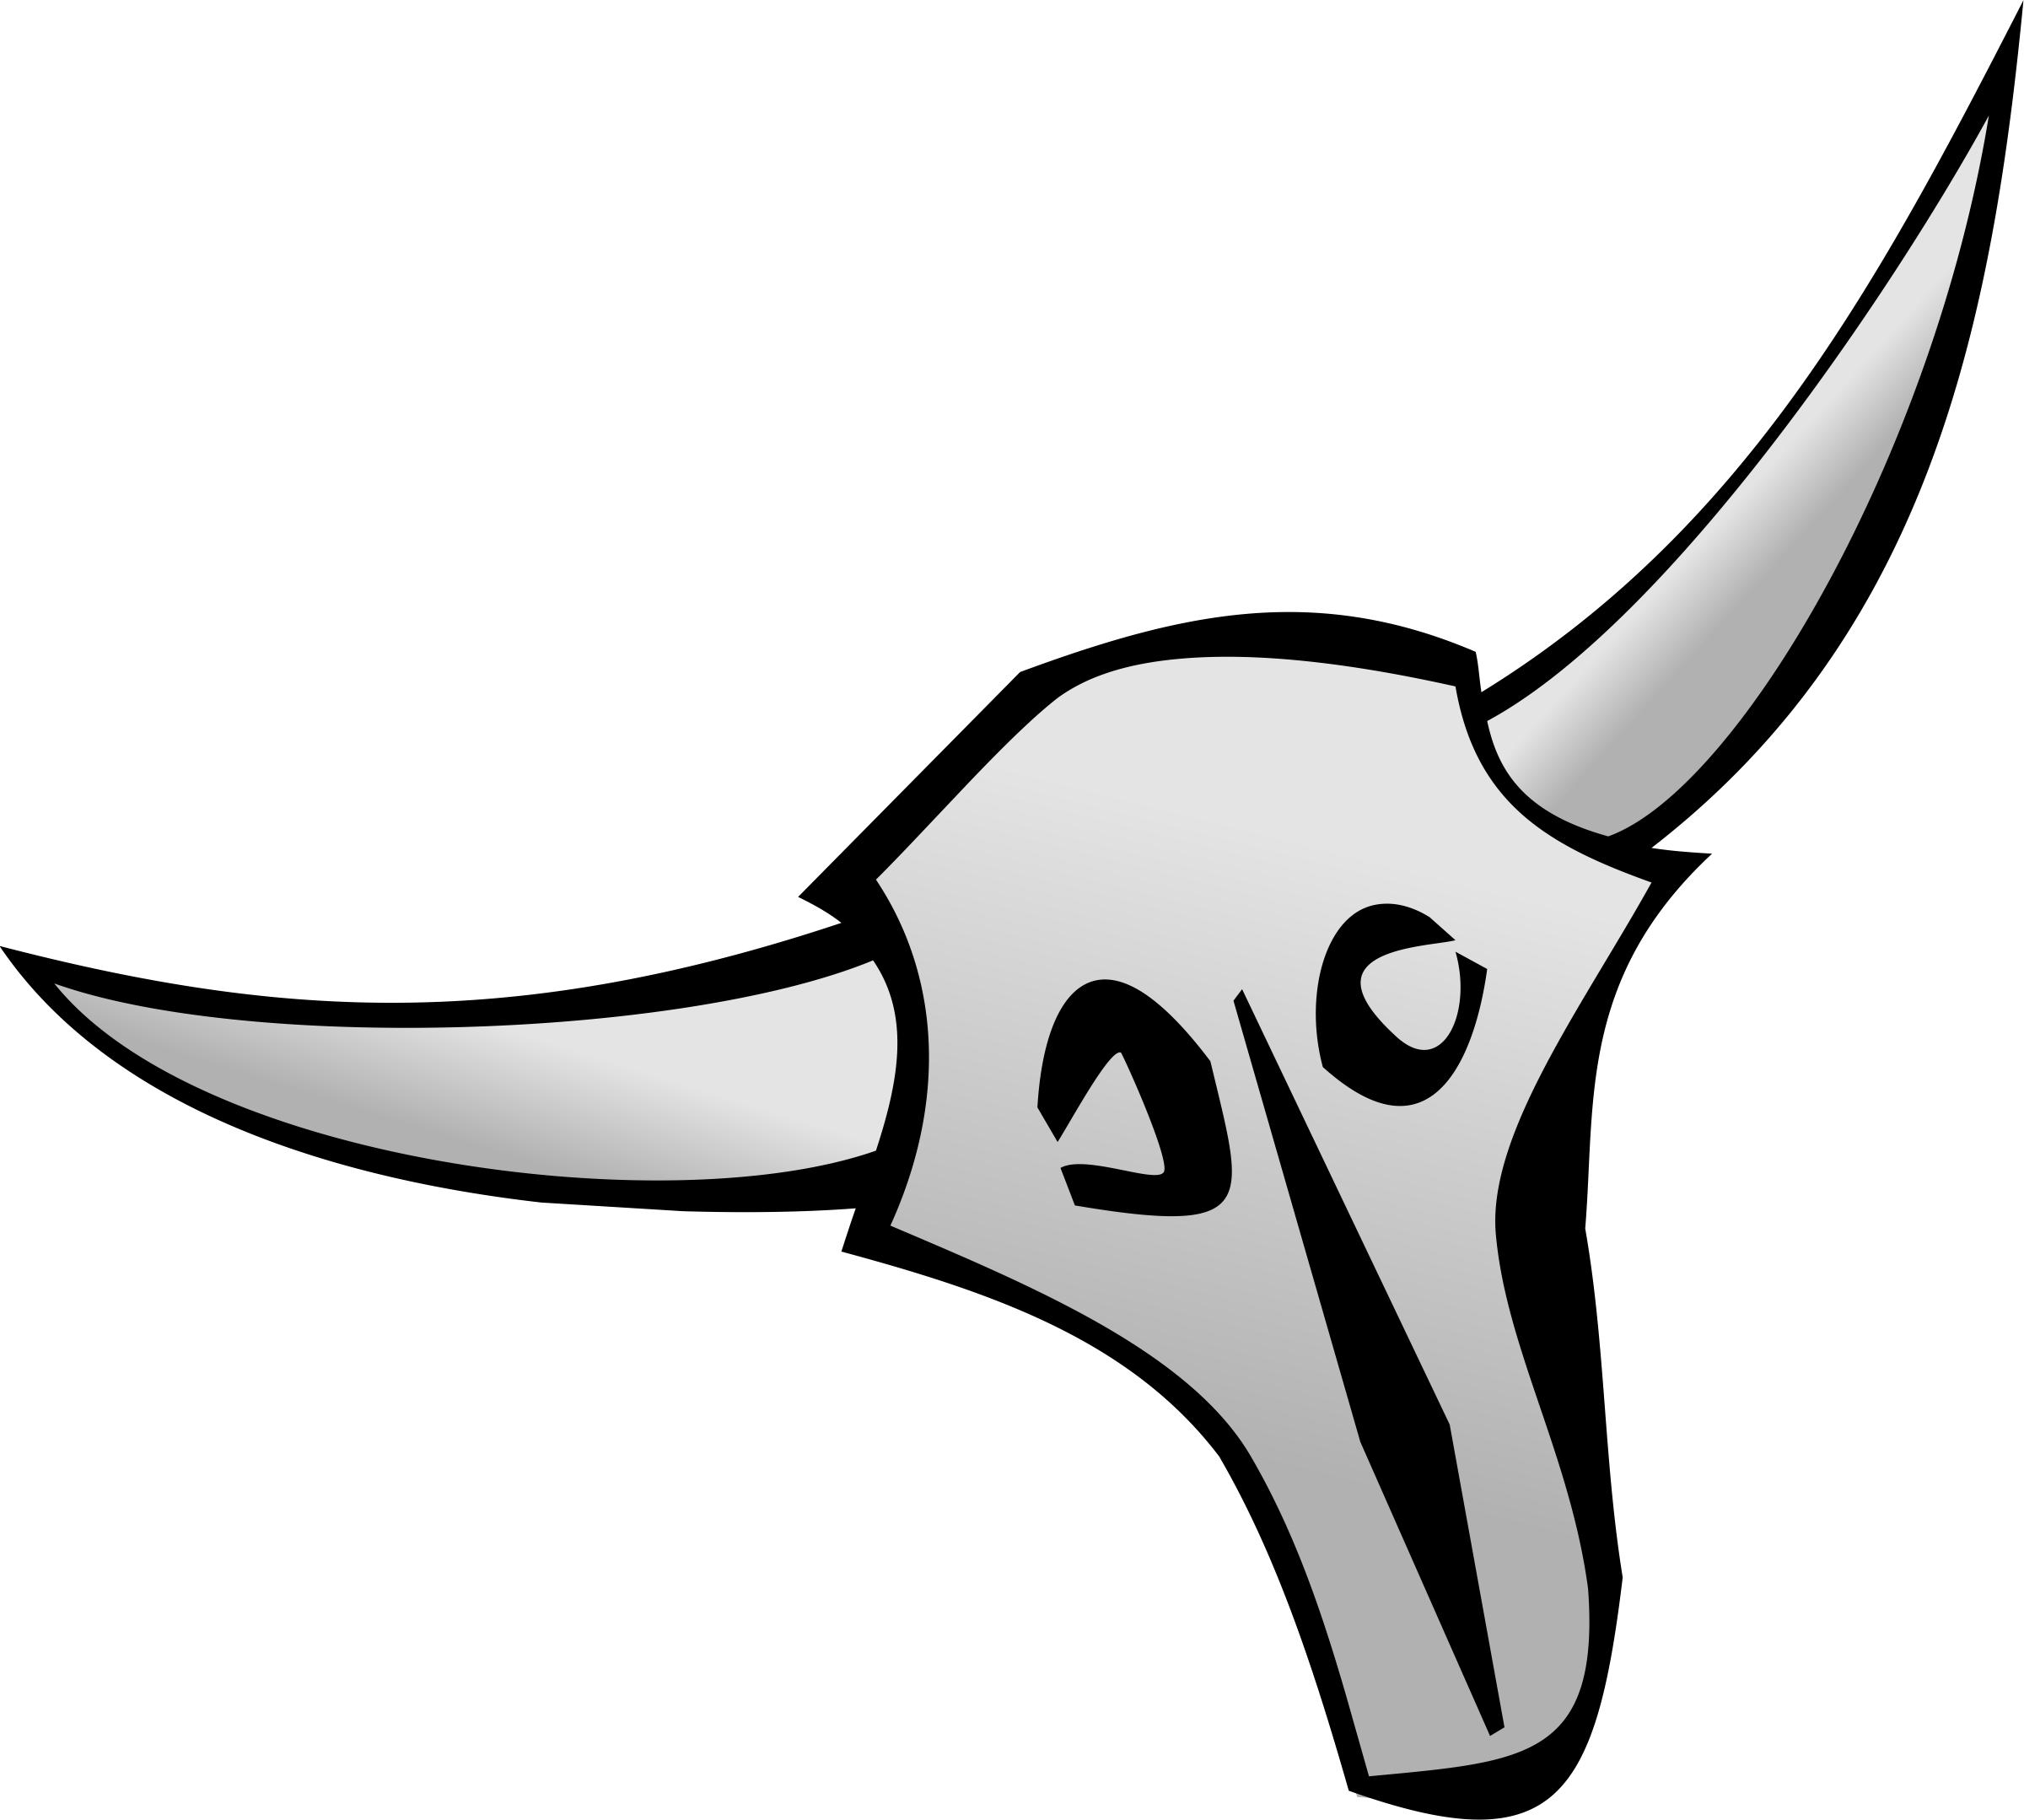 Minimalist cattle skull png